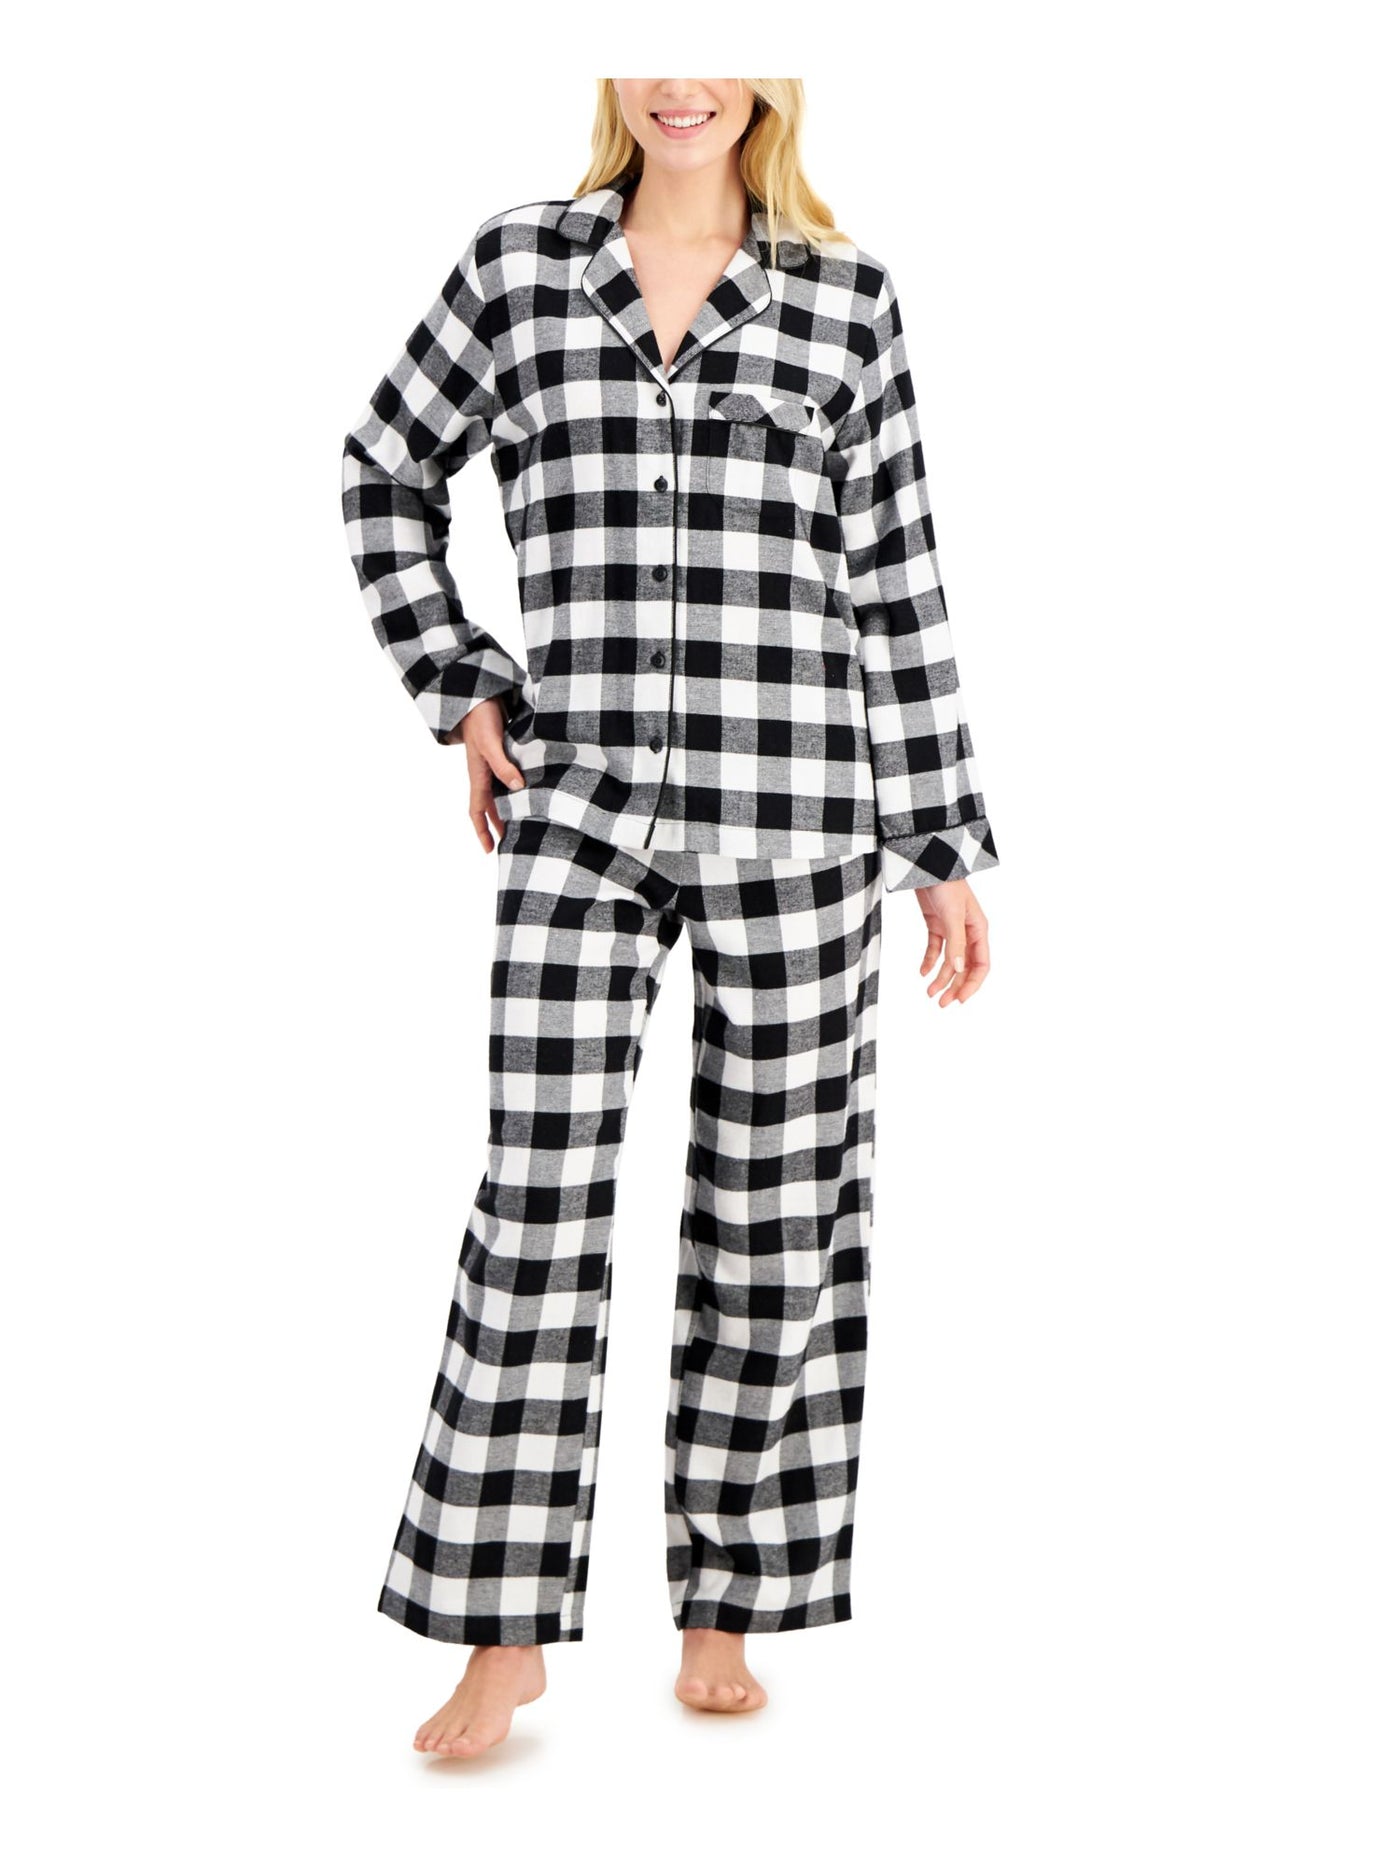 FAMILY PJs Womens Black Plaid Elastic Band Button Up Top Straight leg Pants Pajamas S